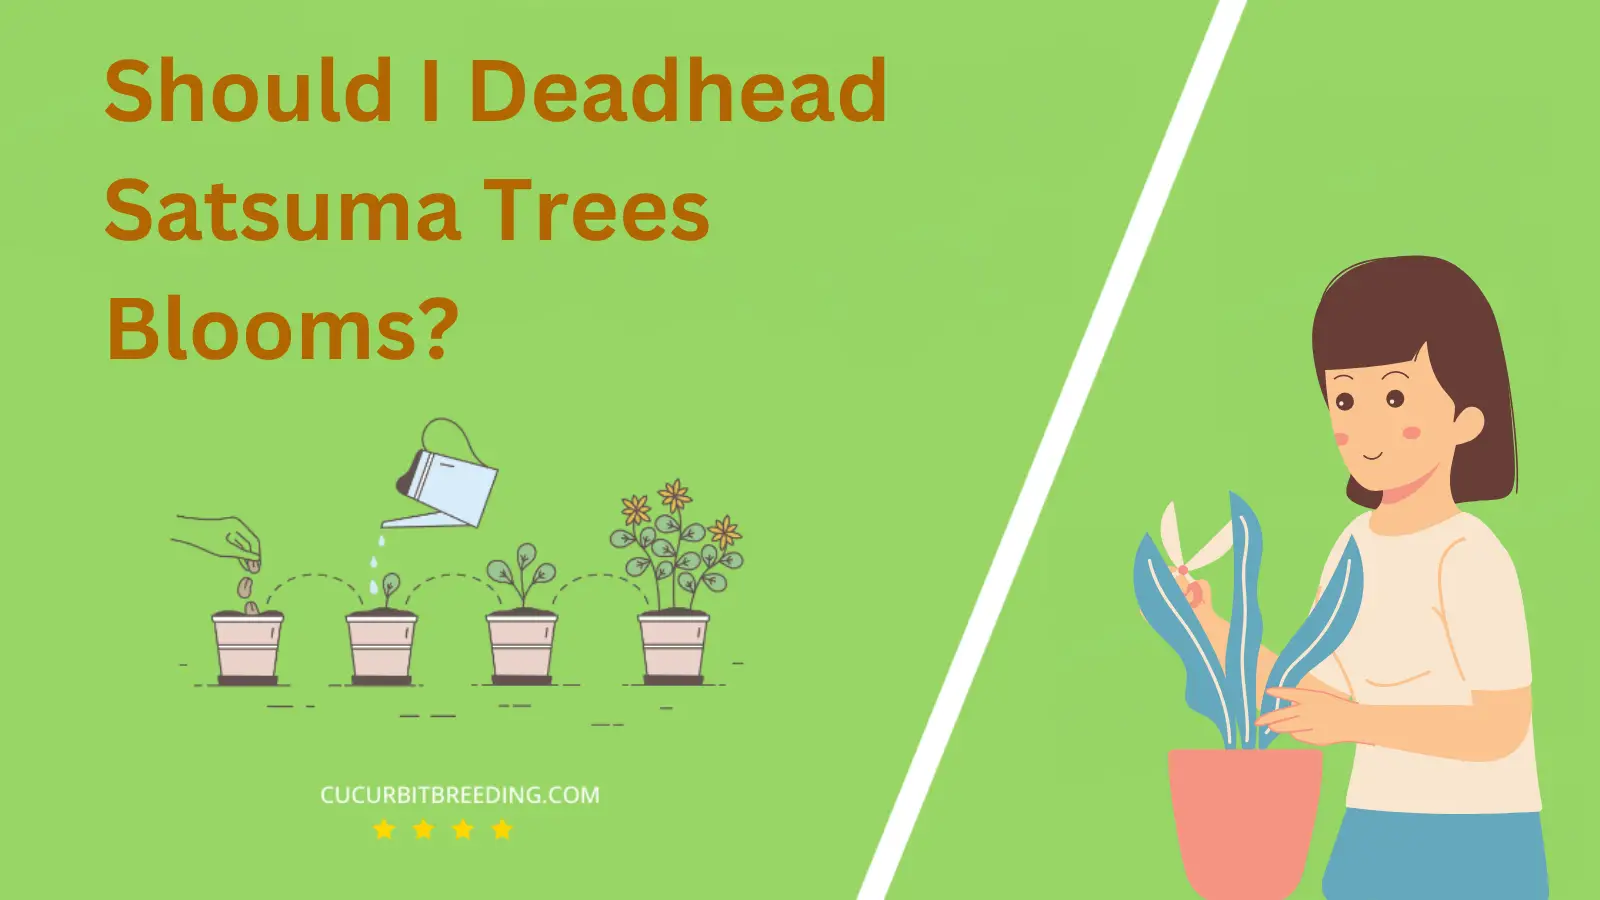 Should I Deadhead Satsuma Trees Blooms?